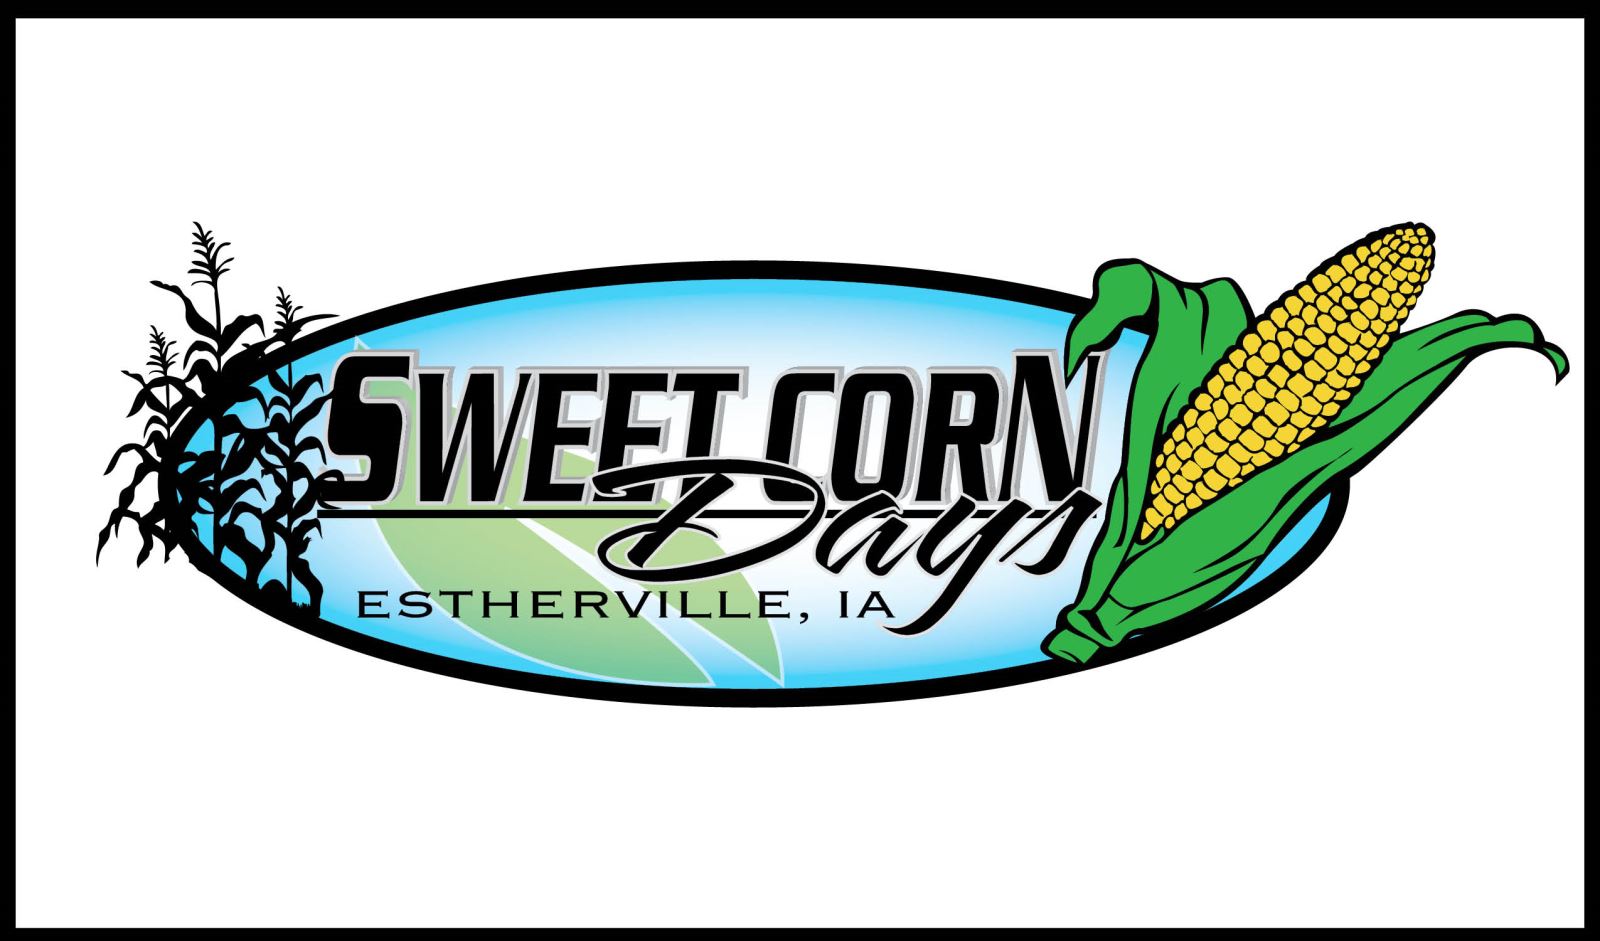 Sweet Corn Days Estherville, IA Sweet Corn Days Estherville, IA